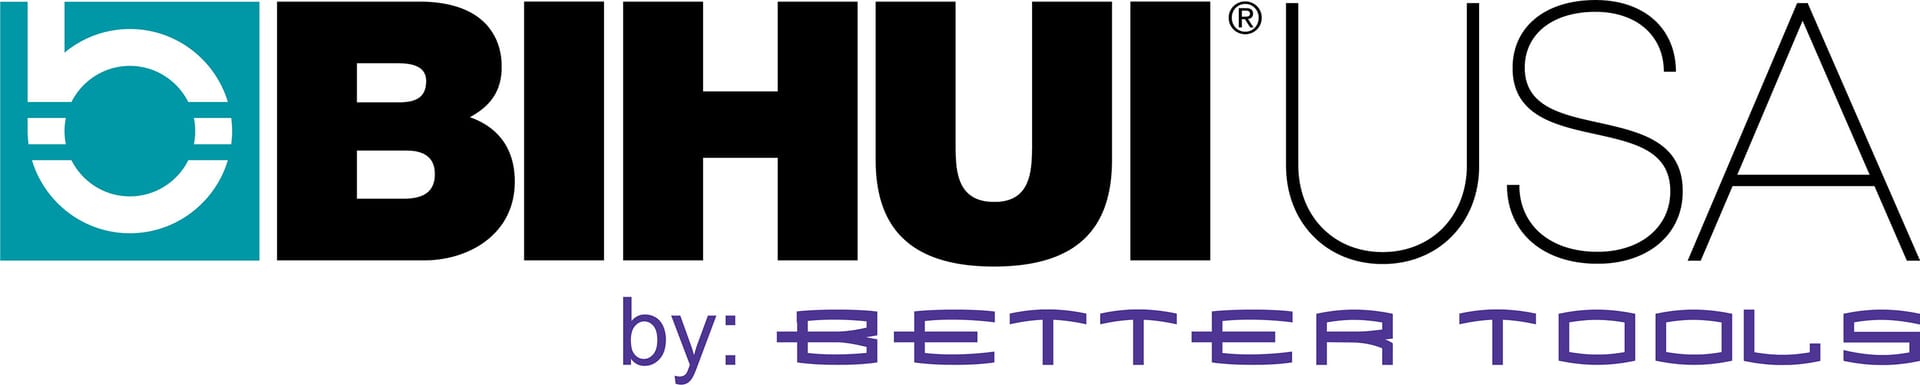 BIHUI USA by Better Tools logo